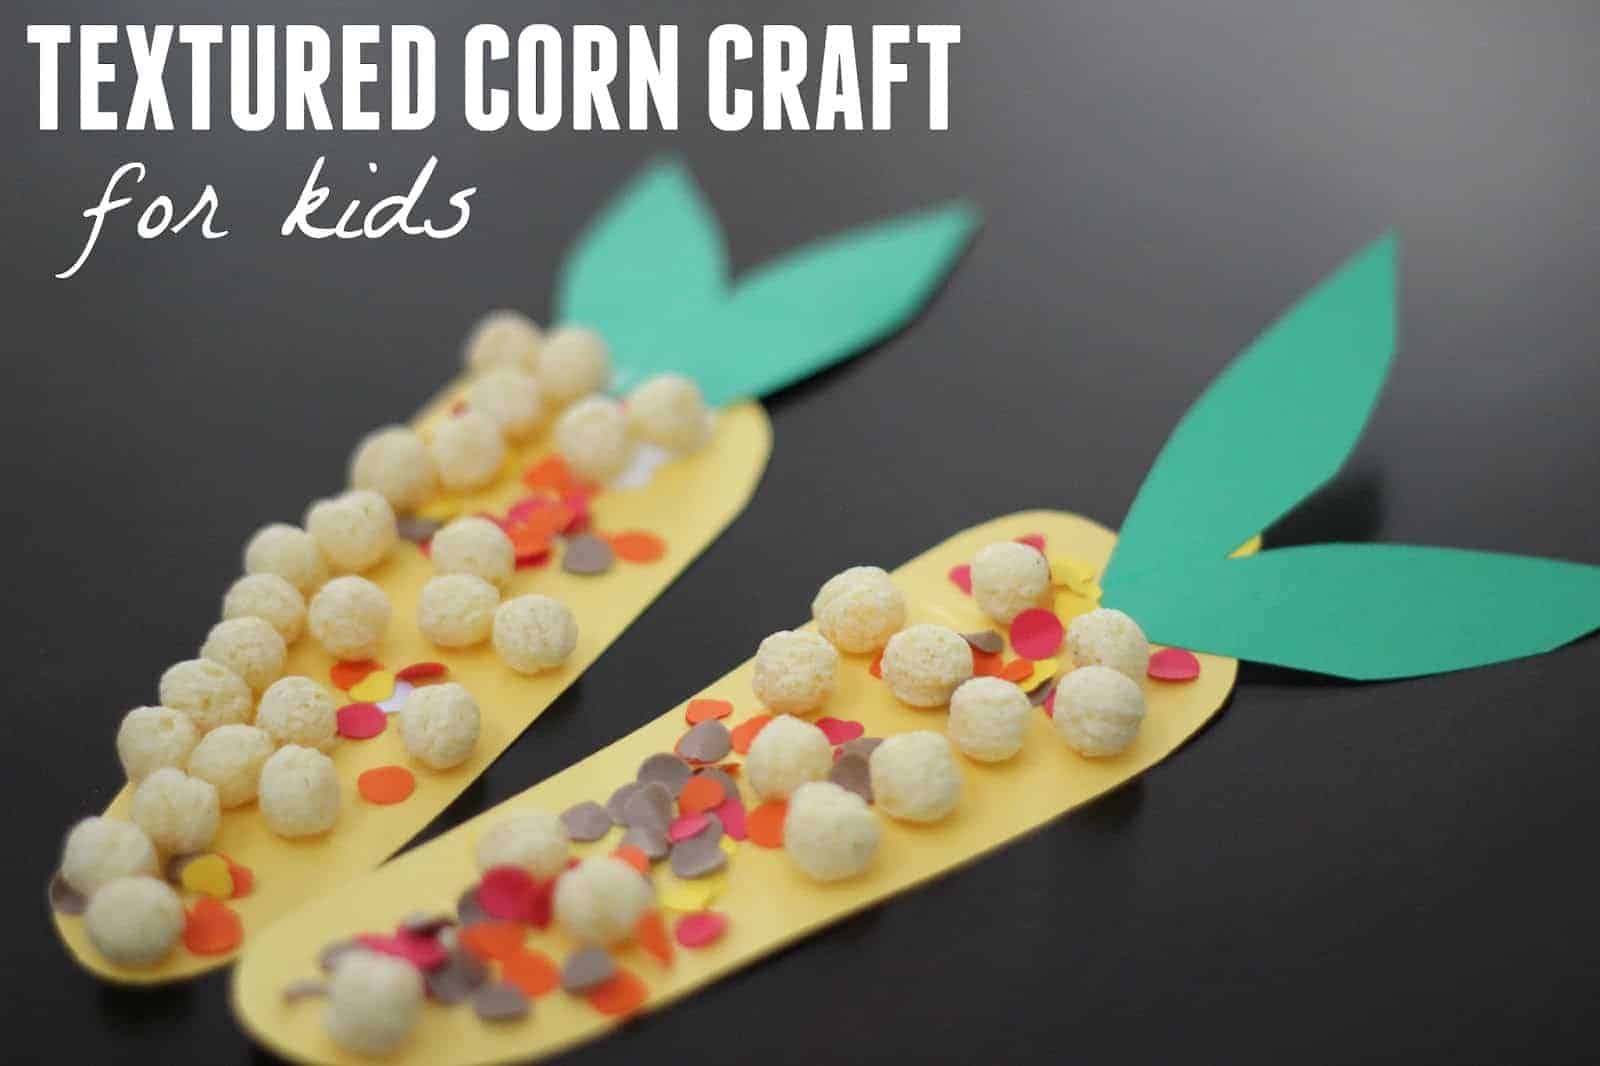 Textured corn craft